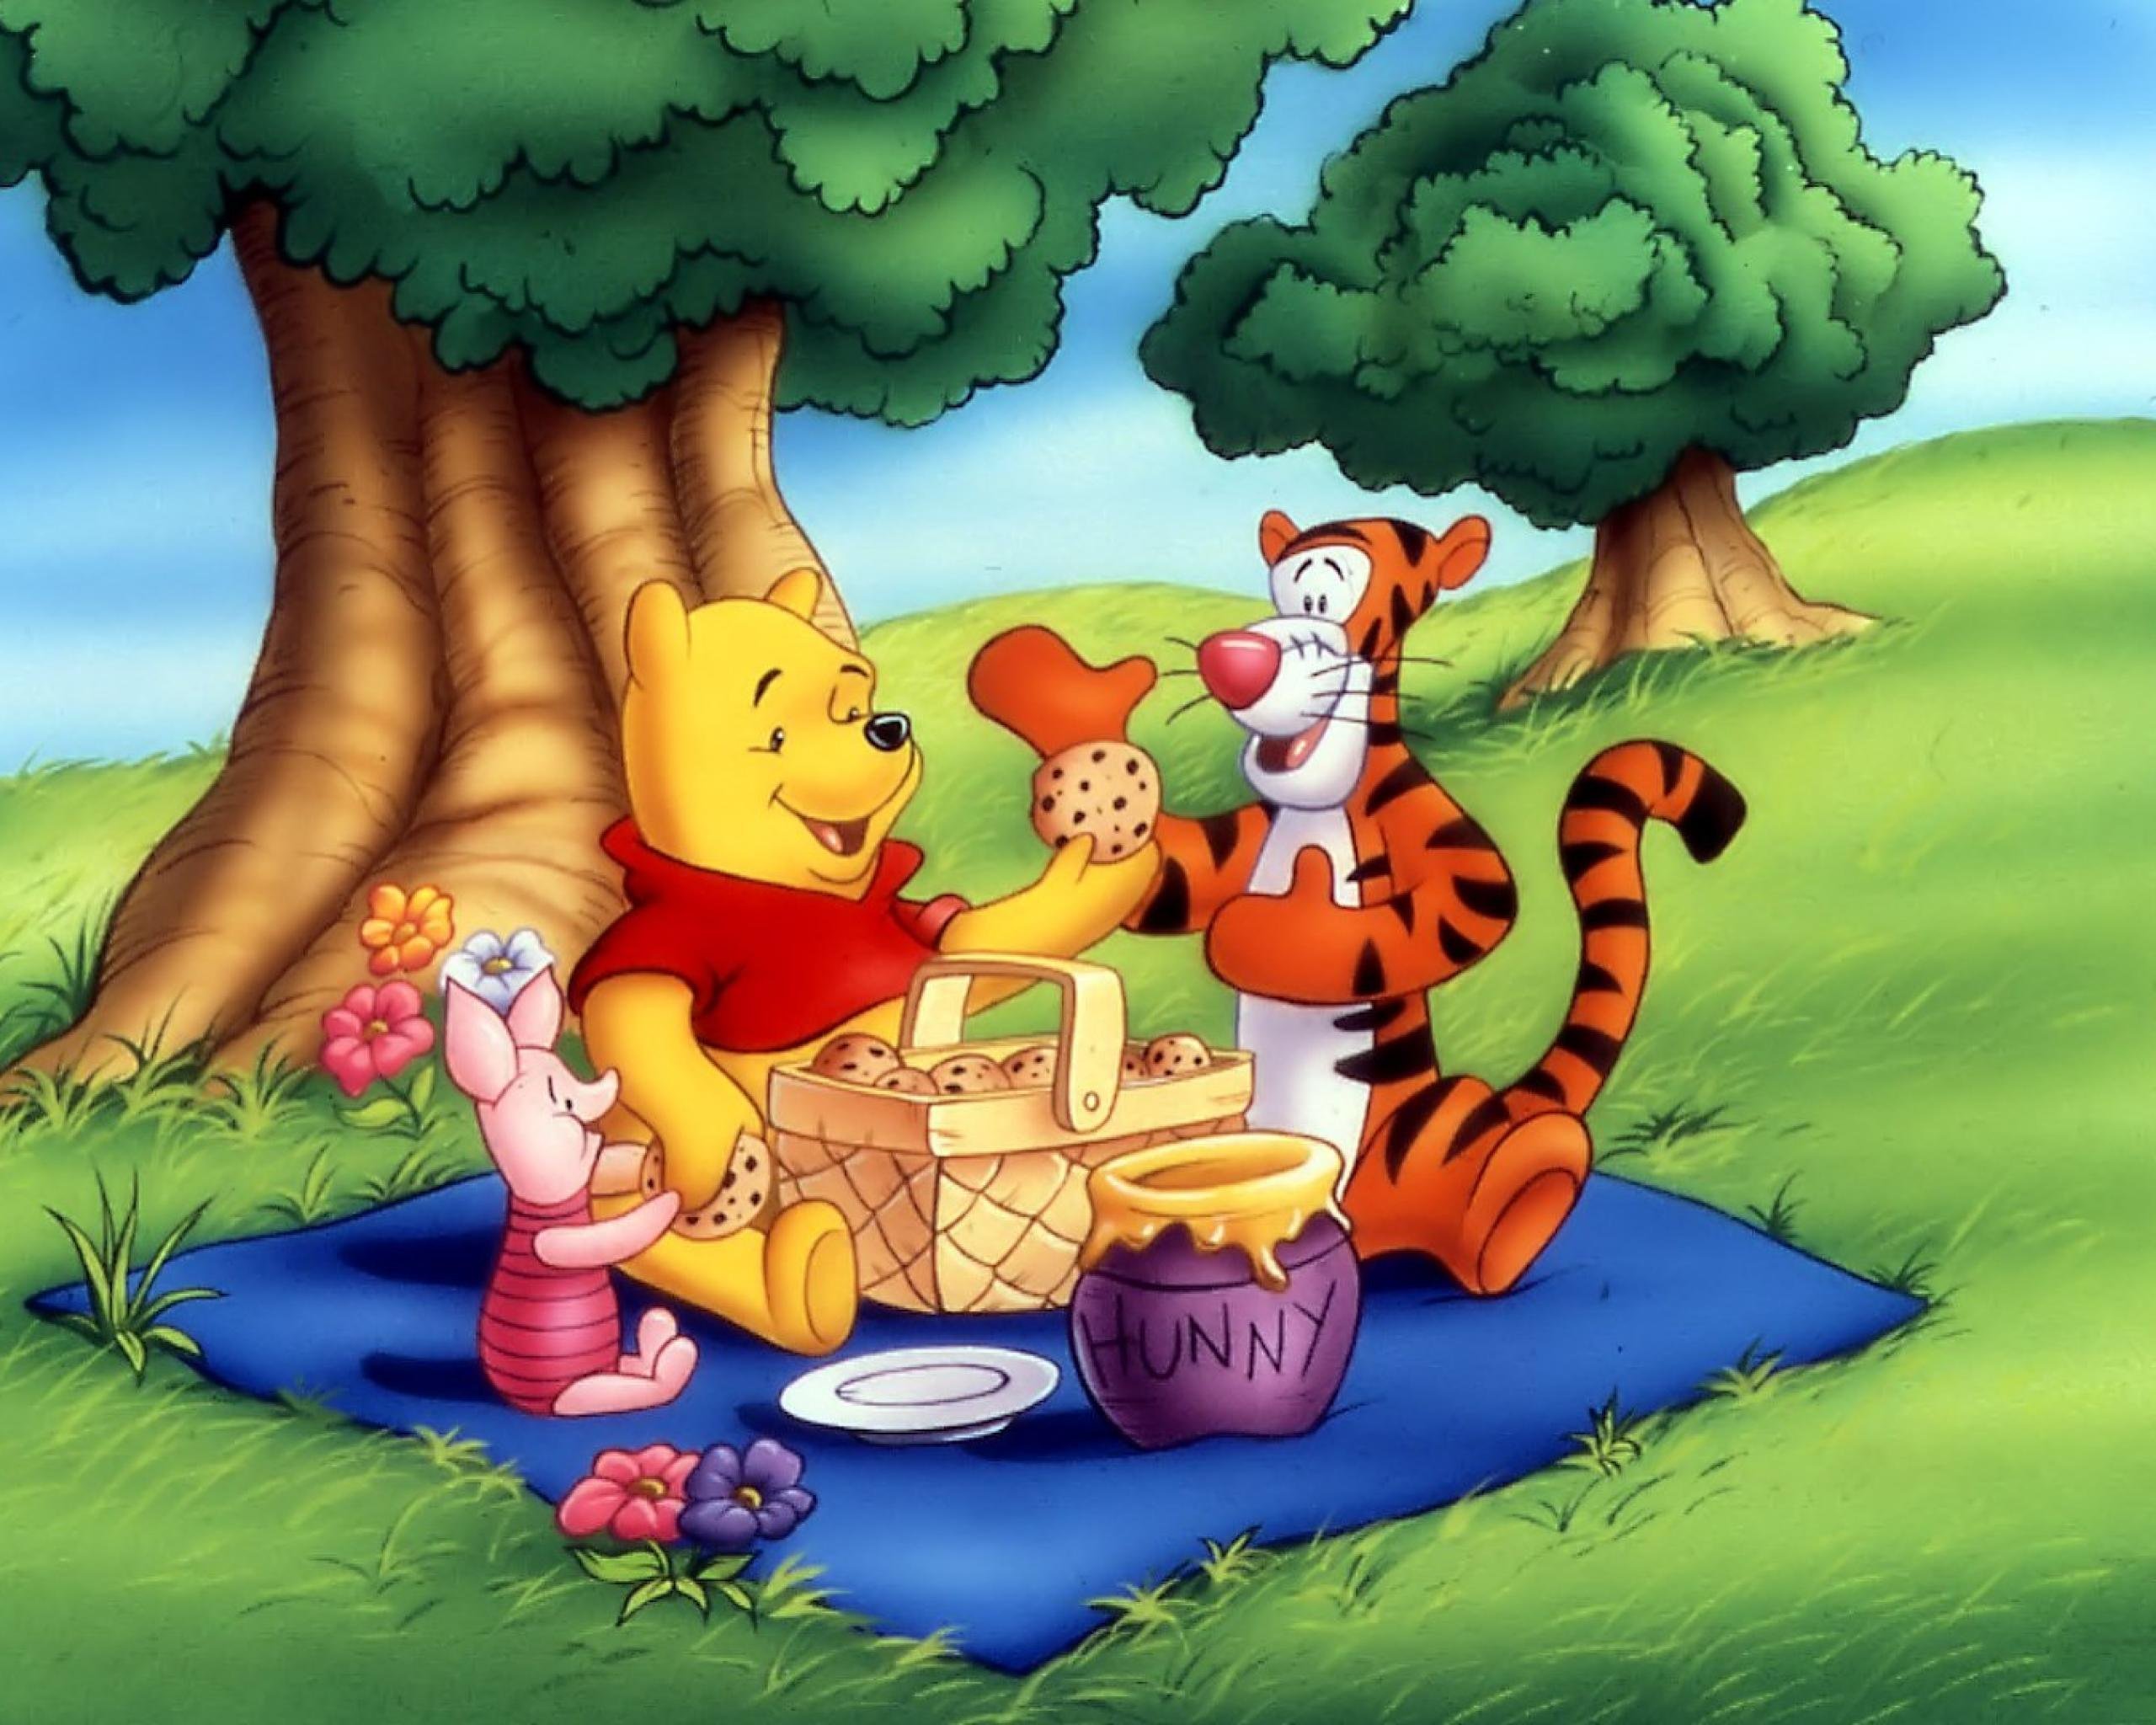 Winnie the pooh. Винни пух мультик. Приключения Винни пуха (the many Adventures of Winnie the Pooh). Винни пух Дисней. Мультик Винни пух Дисней.